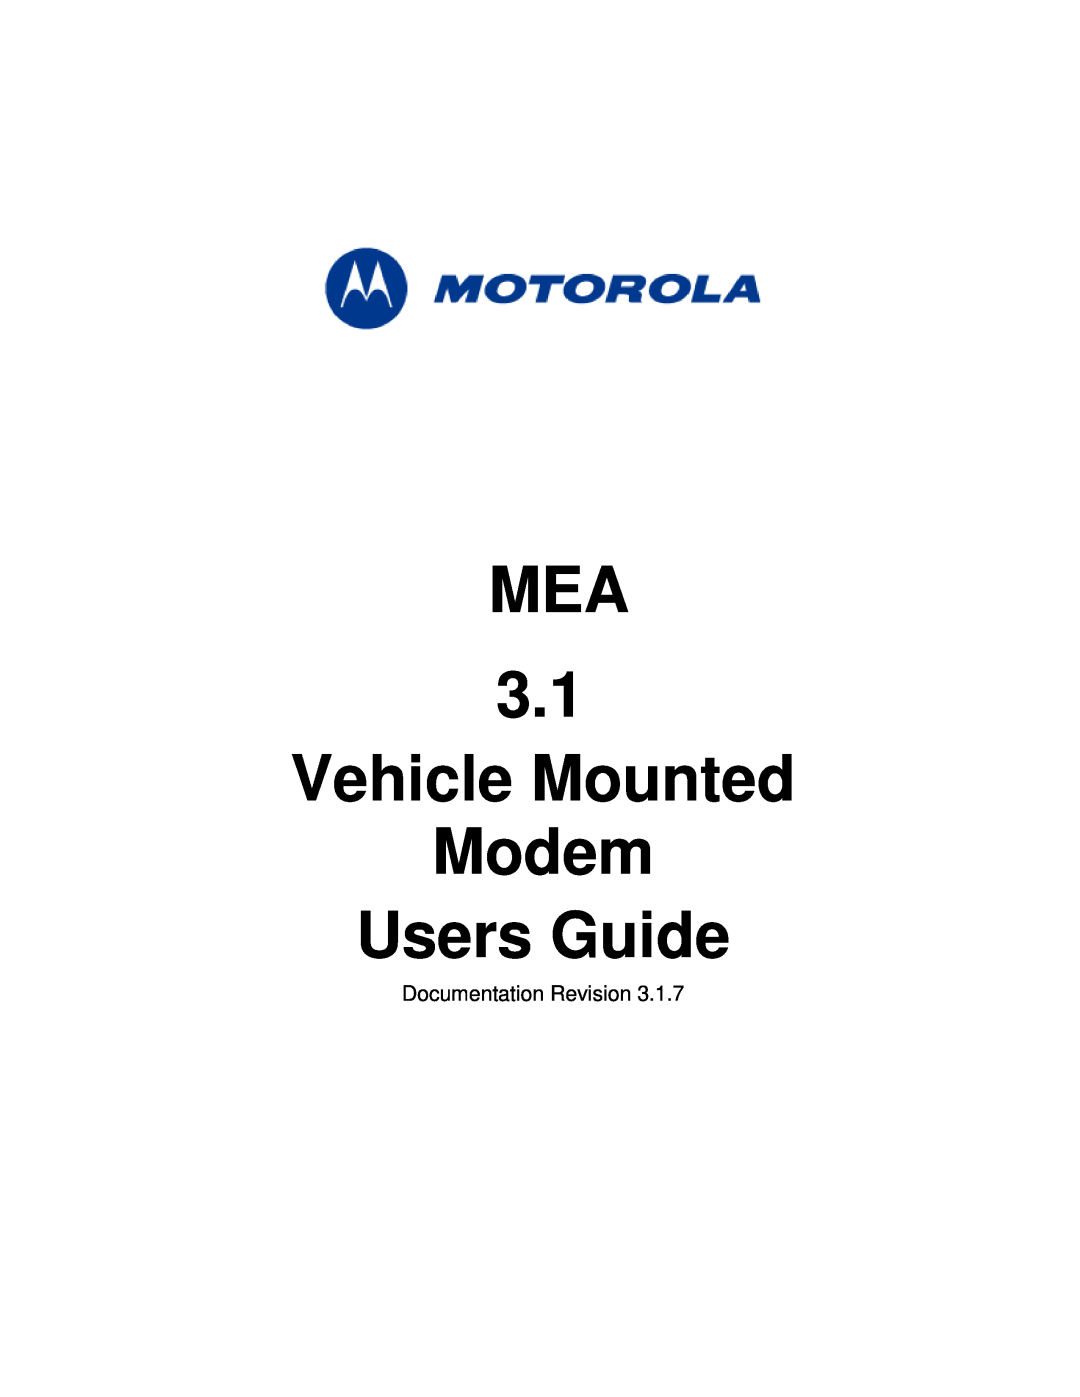 Motorola manual MEA 3.1 Vehicle Mounted Modem Users Guide, Documentation Revision 